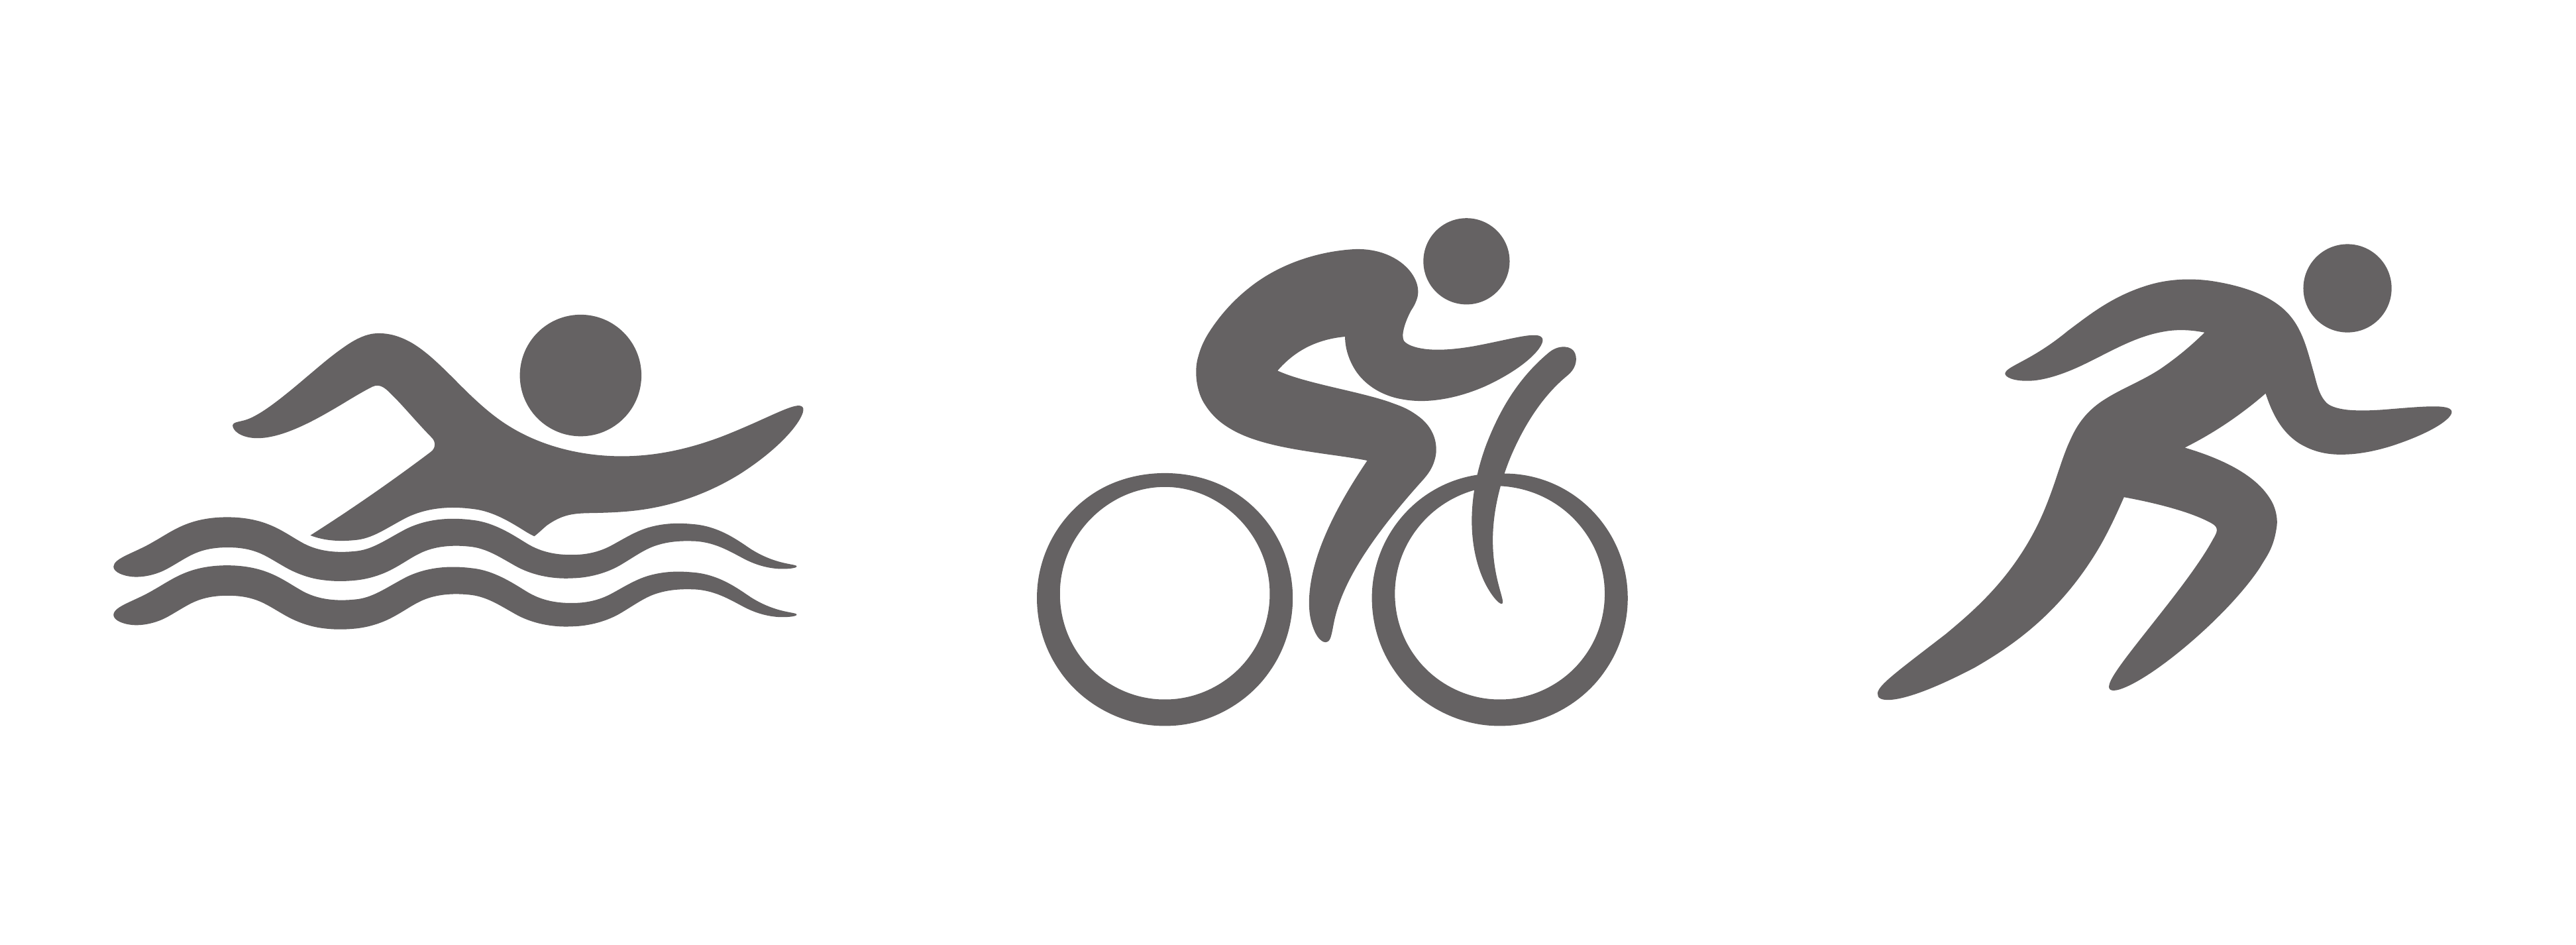 Triathlete Logo - UBsports.com - Your Sports Life Online